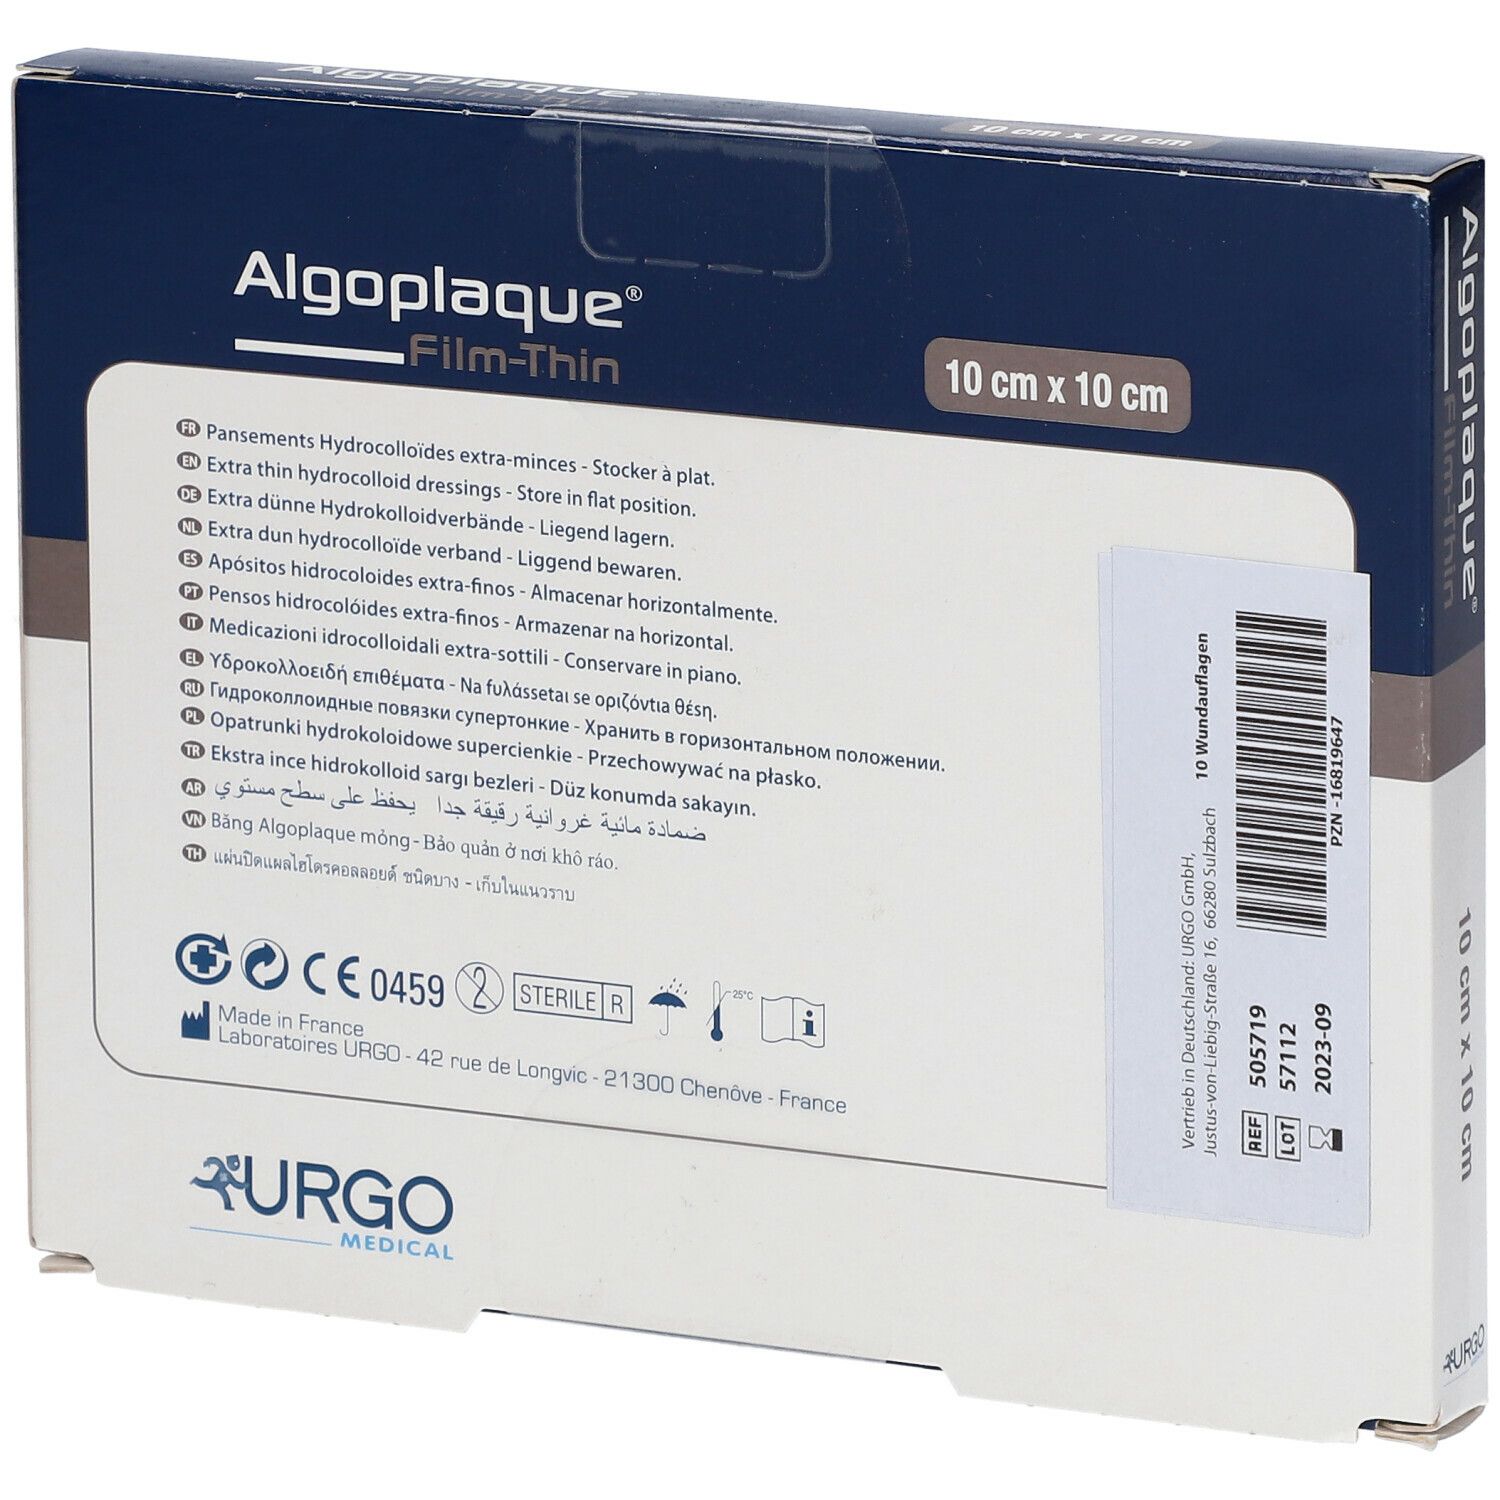 URGO Algoplaque® Film-Thin 10 x 10 cm